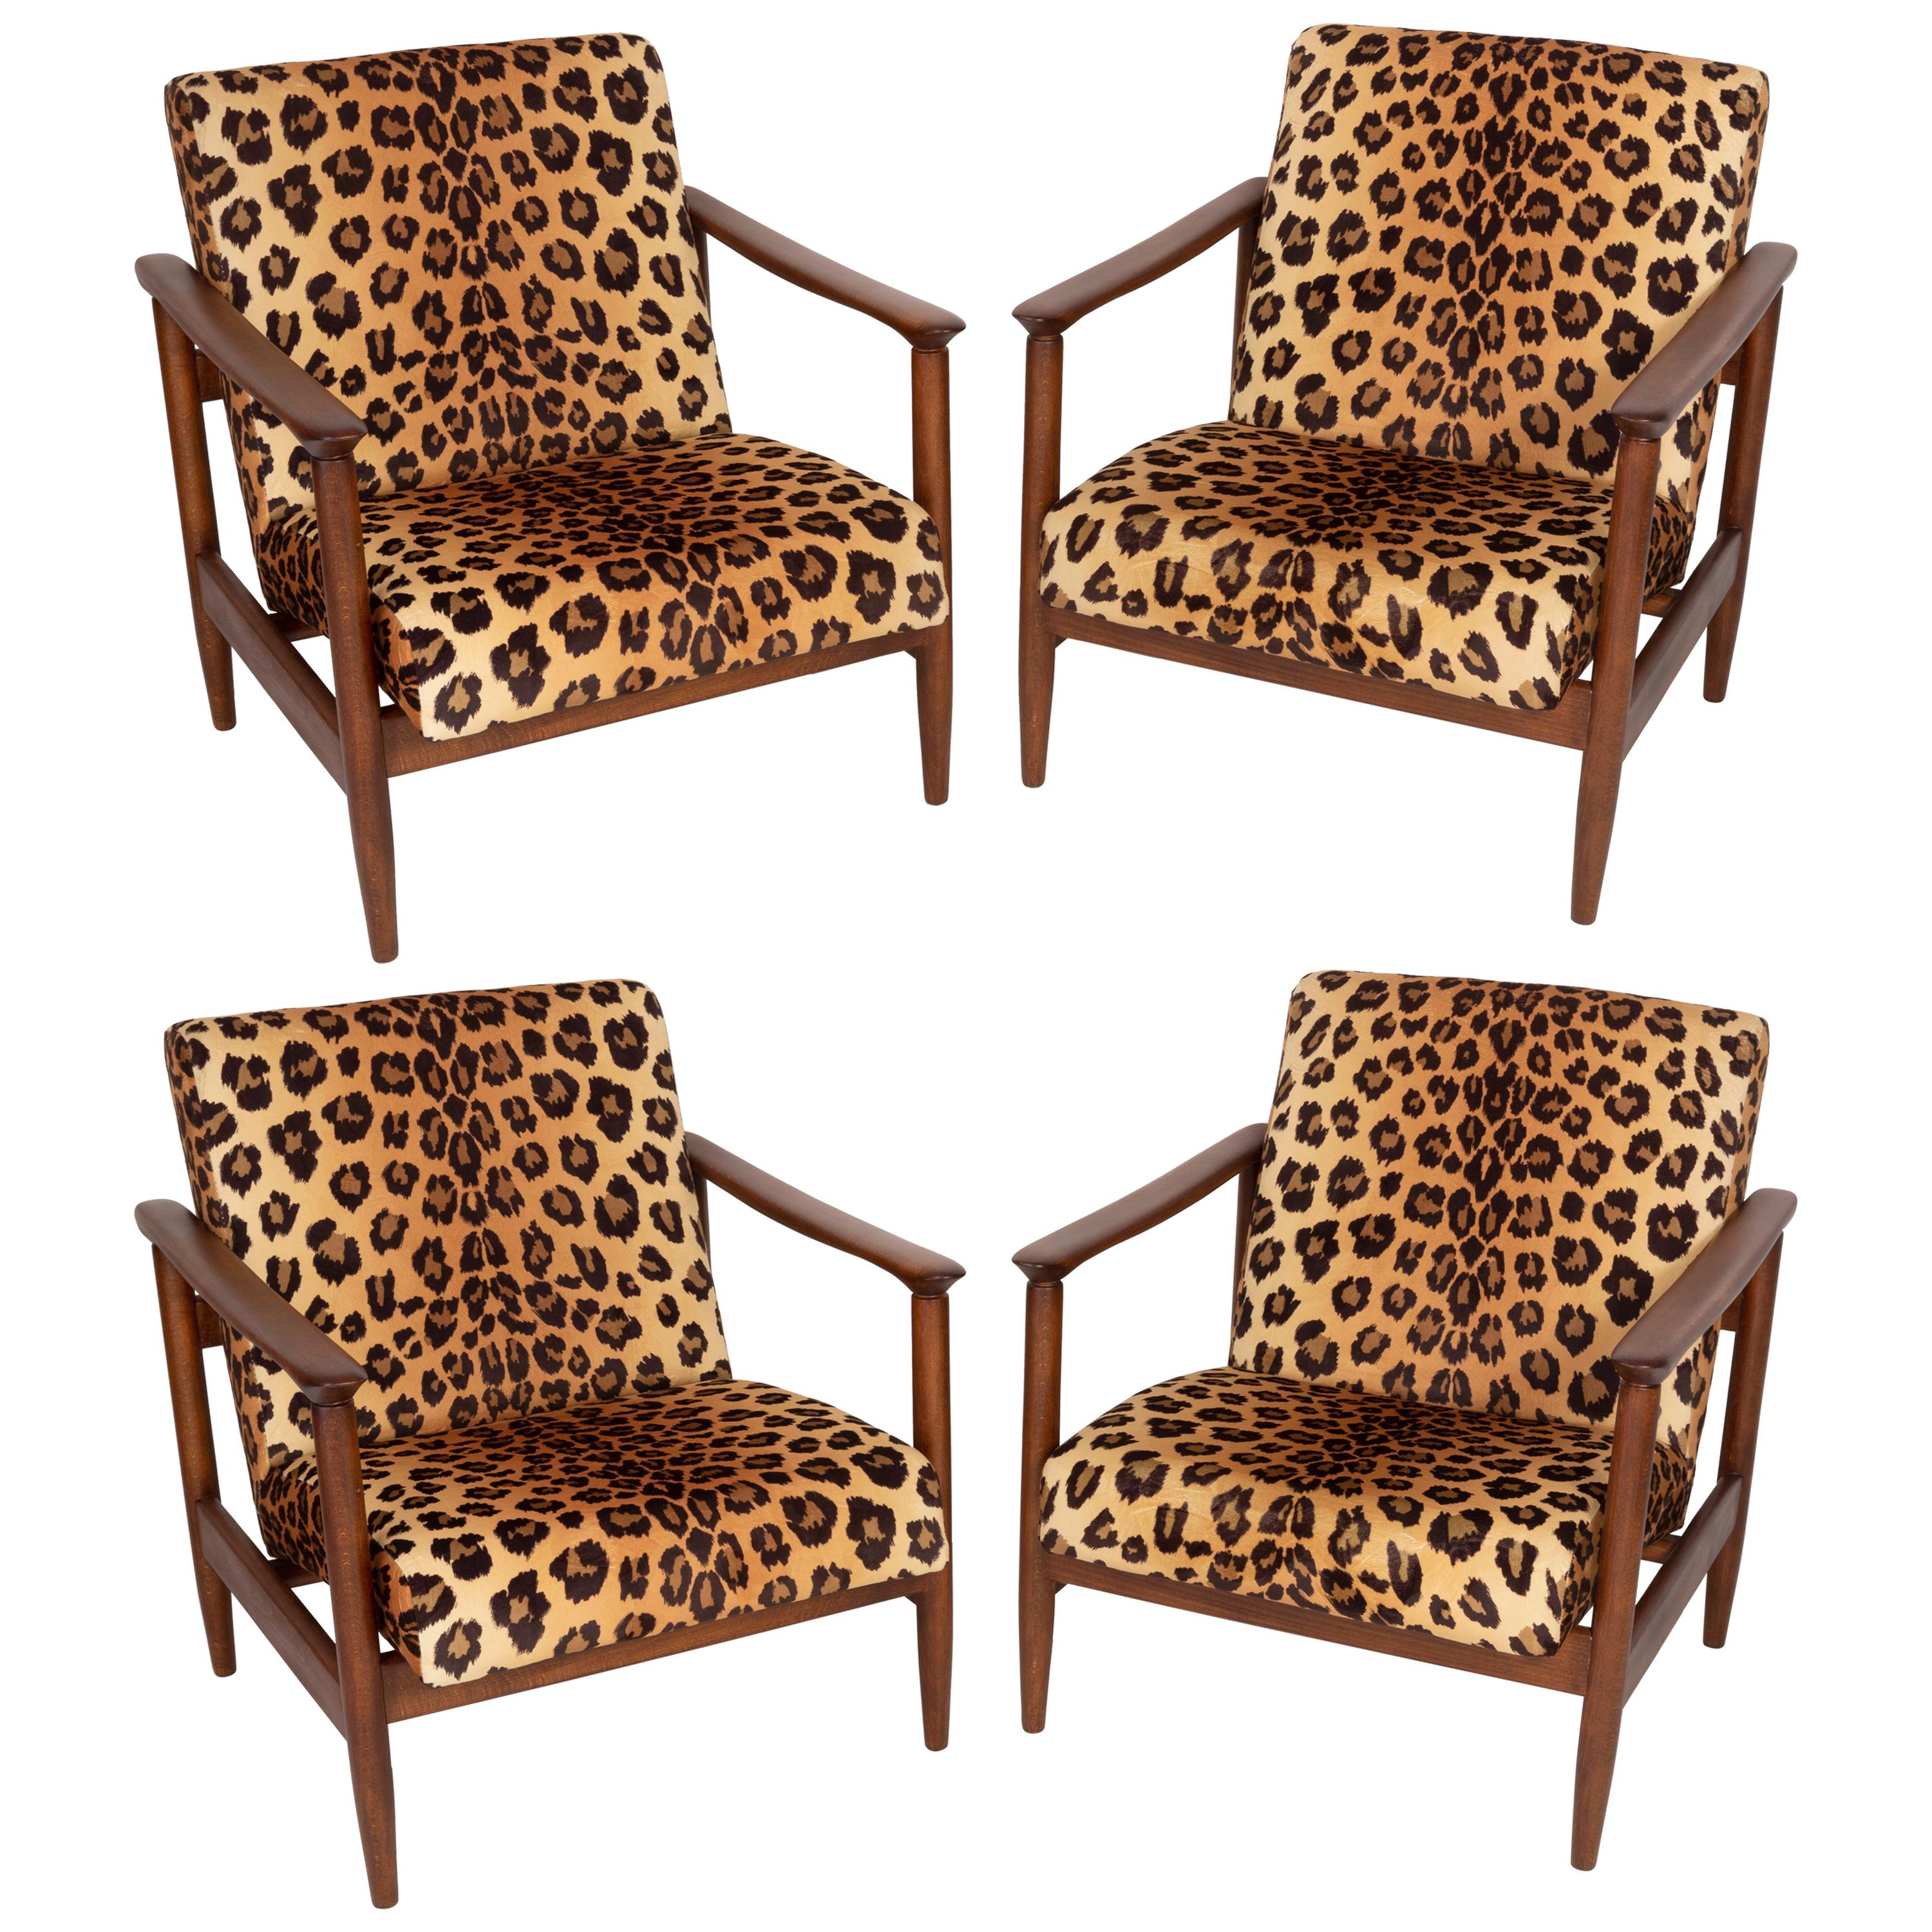 Vier Sessel mit Leopardenmuster aus Samt, Hollywood Regency, Edmund Homa, 1960er Jahre, Polen